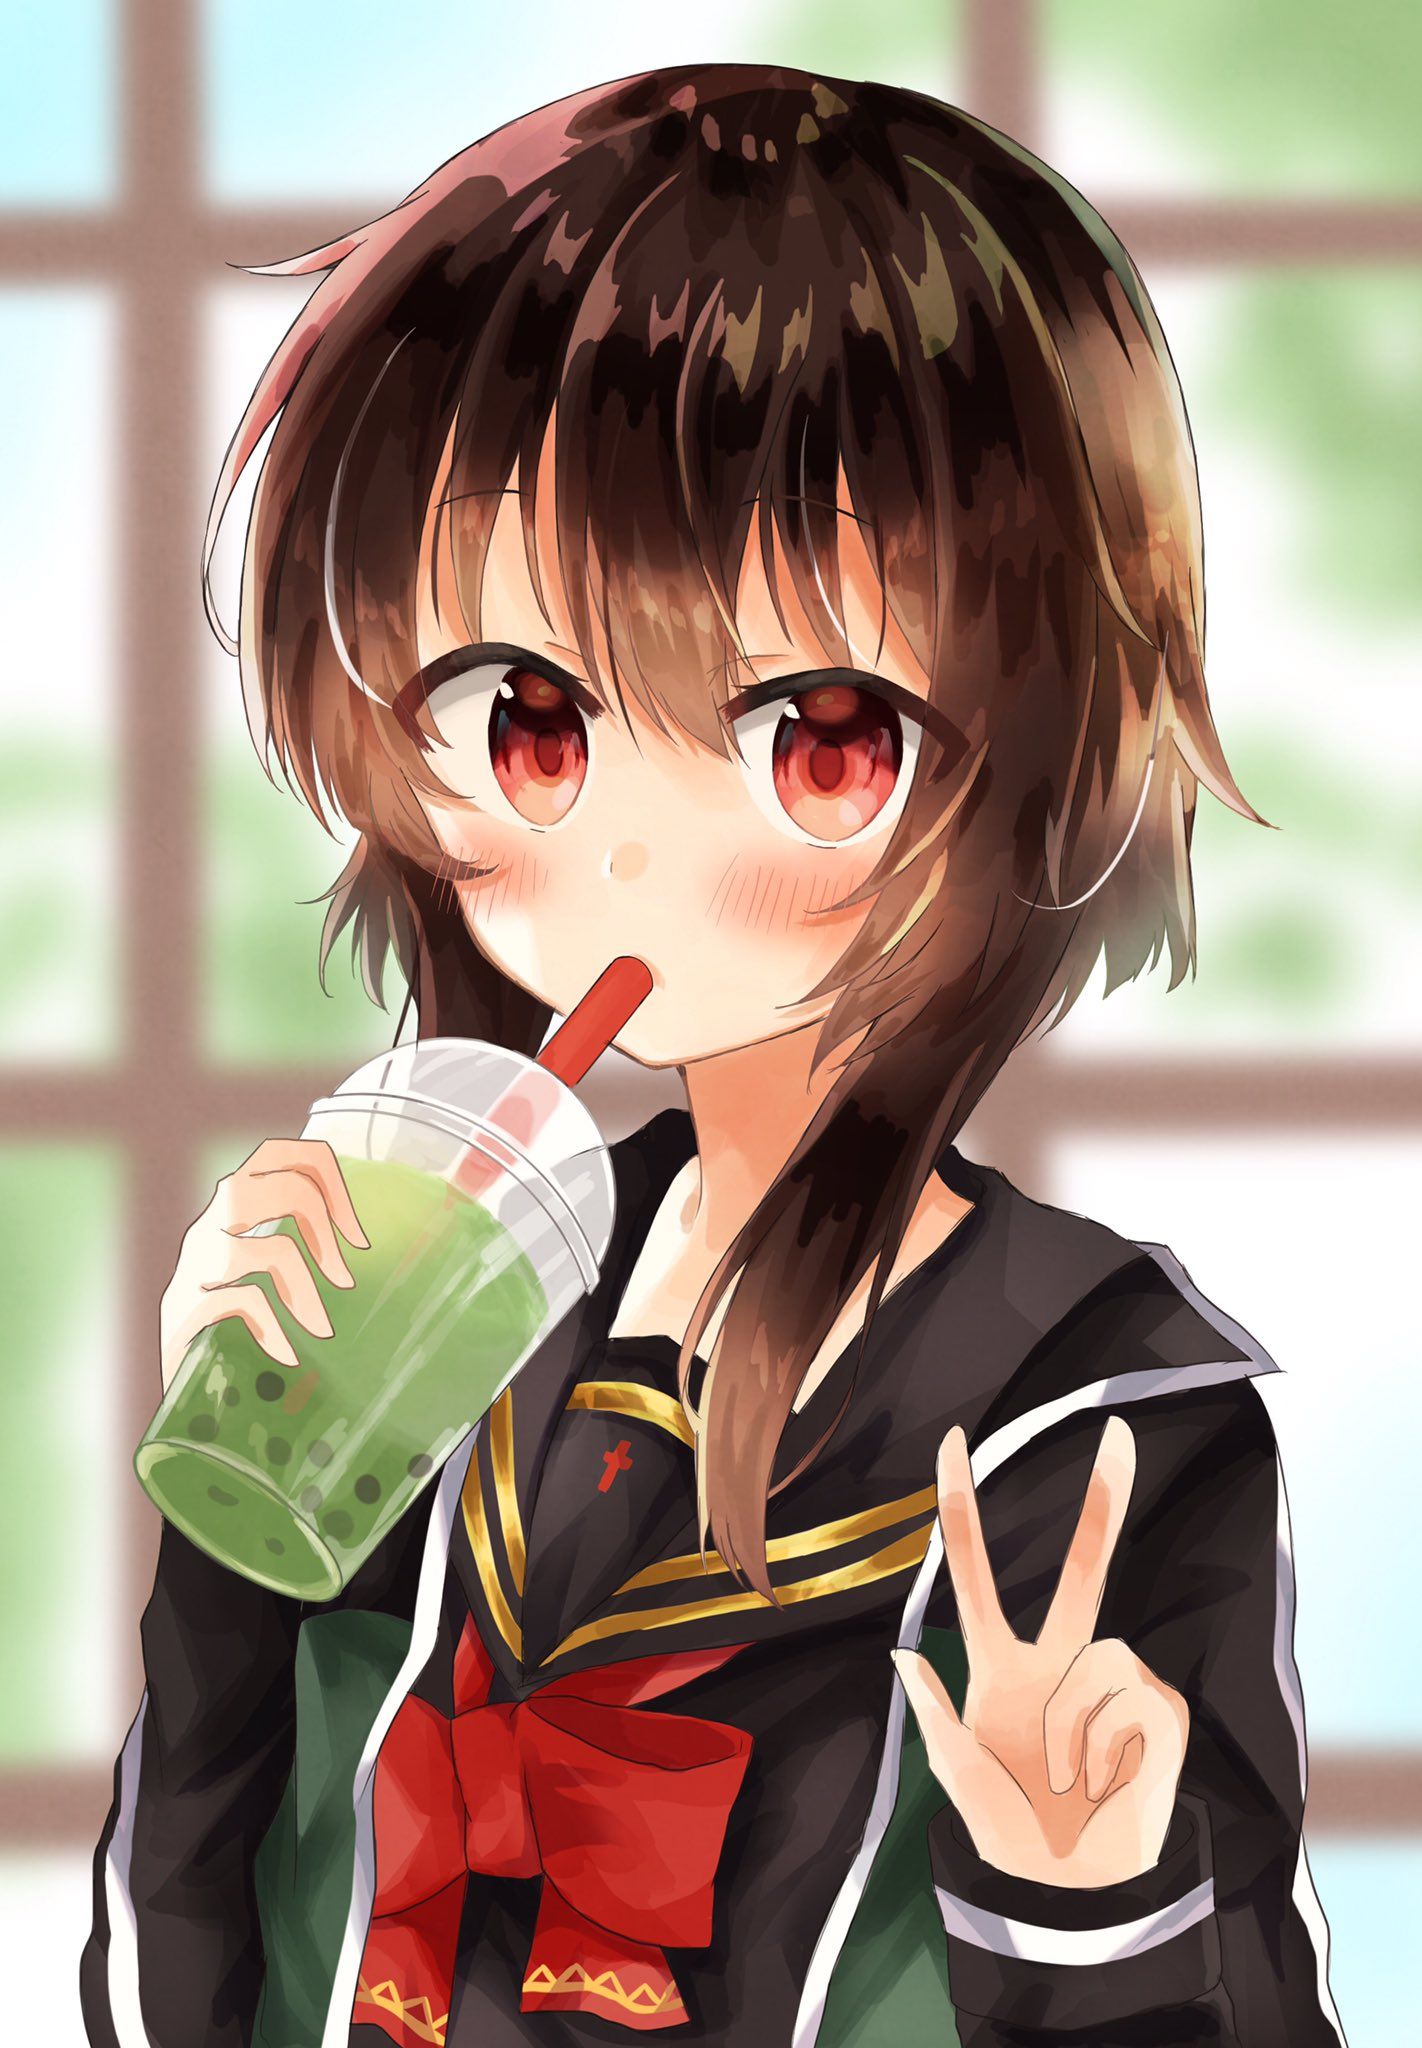 Anime girls drinking tea are so cute  iFunny